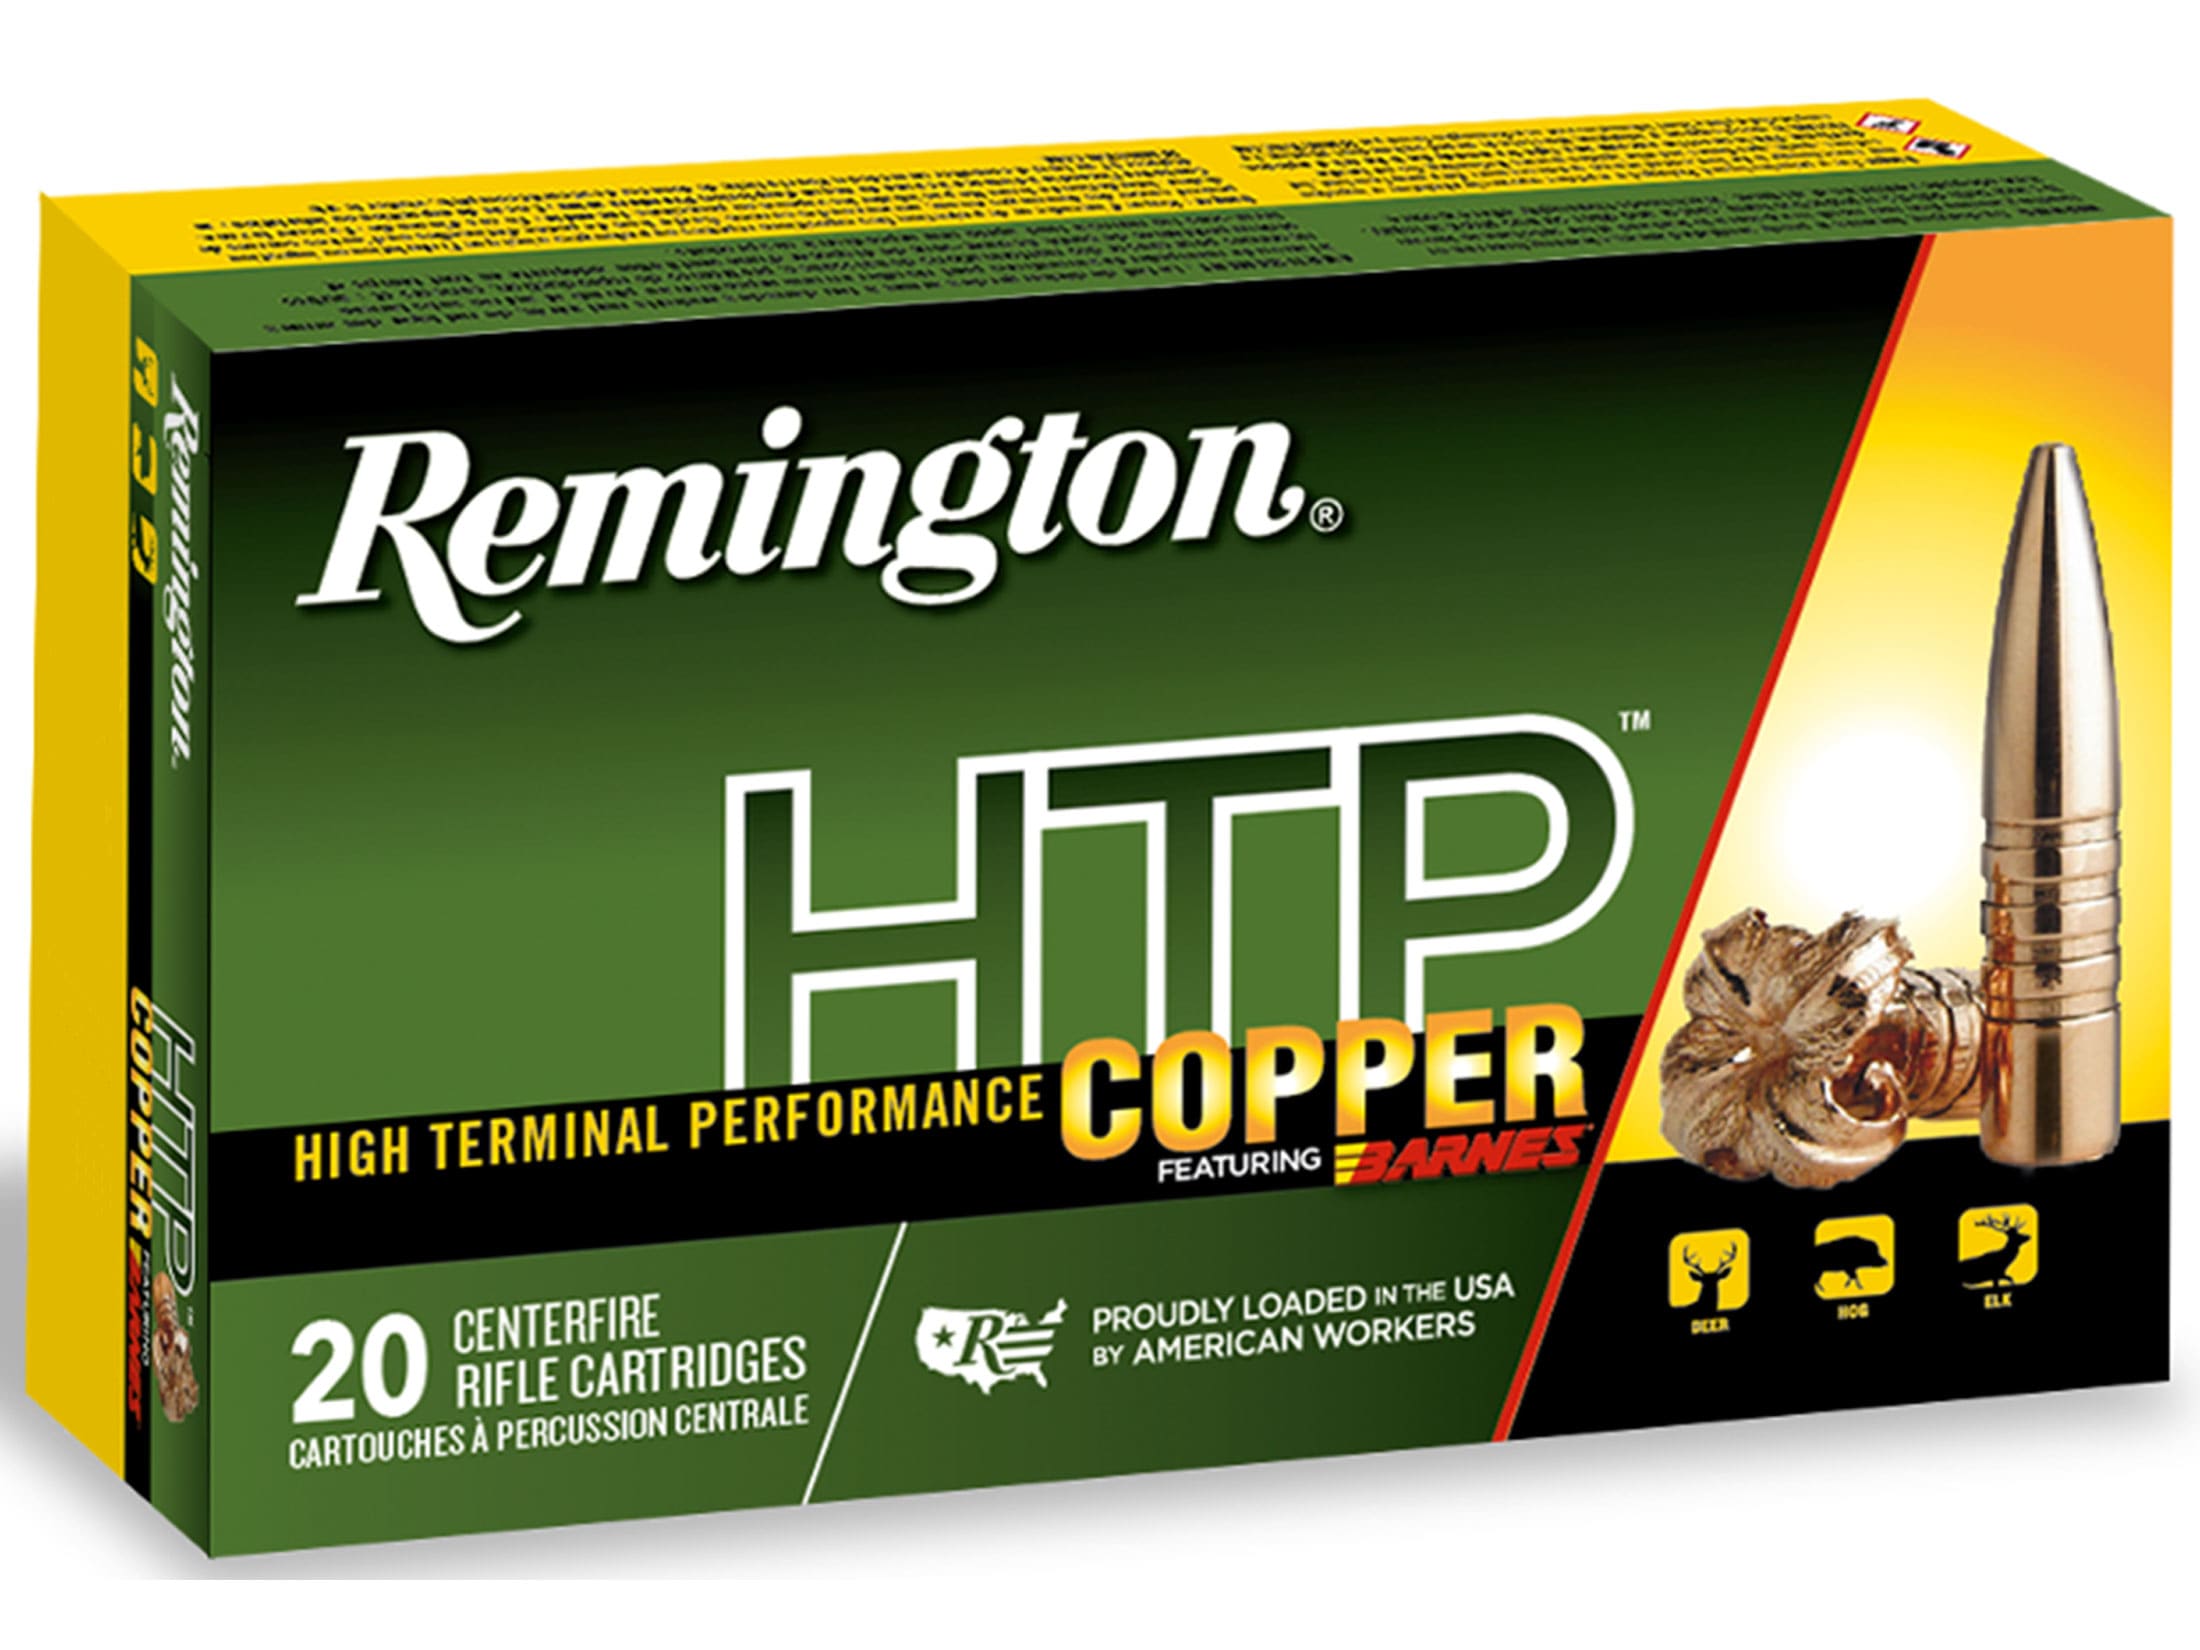 Remington HTP Copper High Terminal Performance